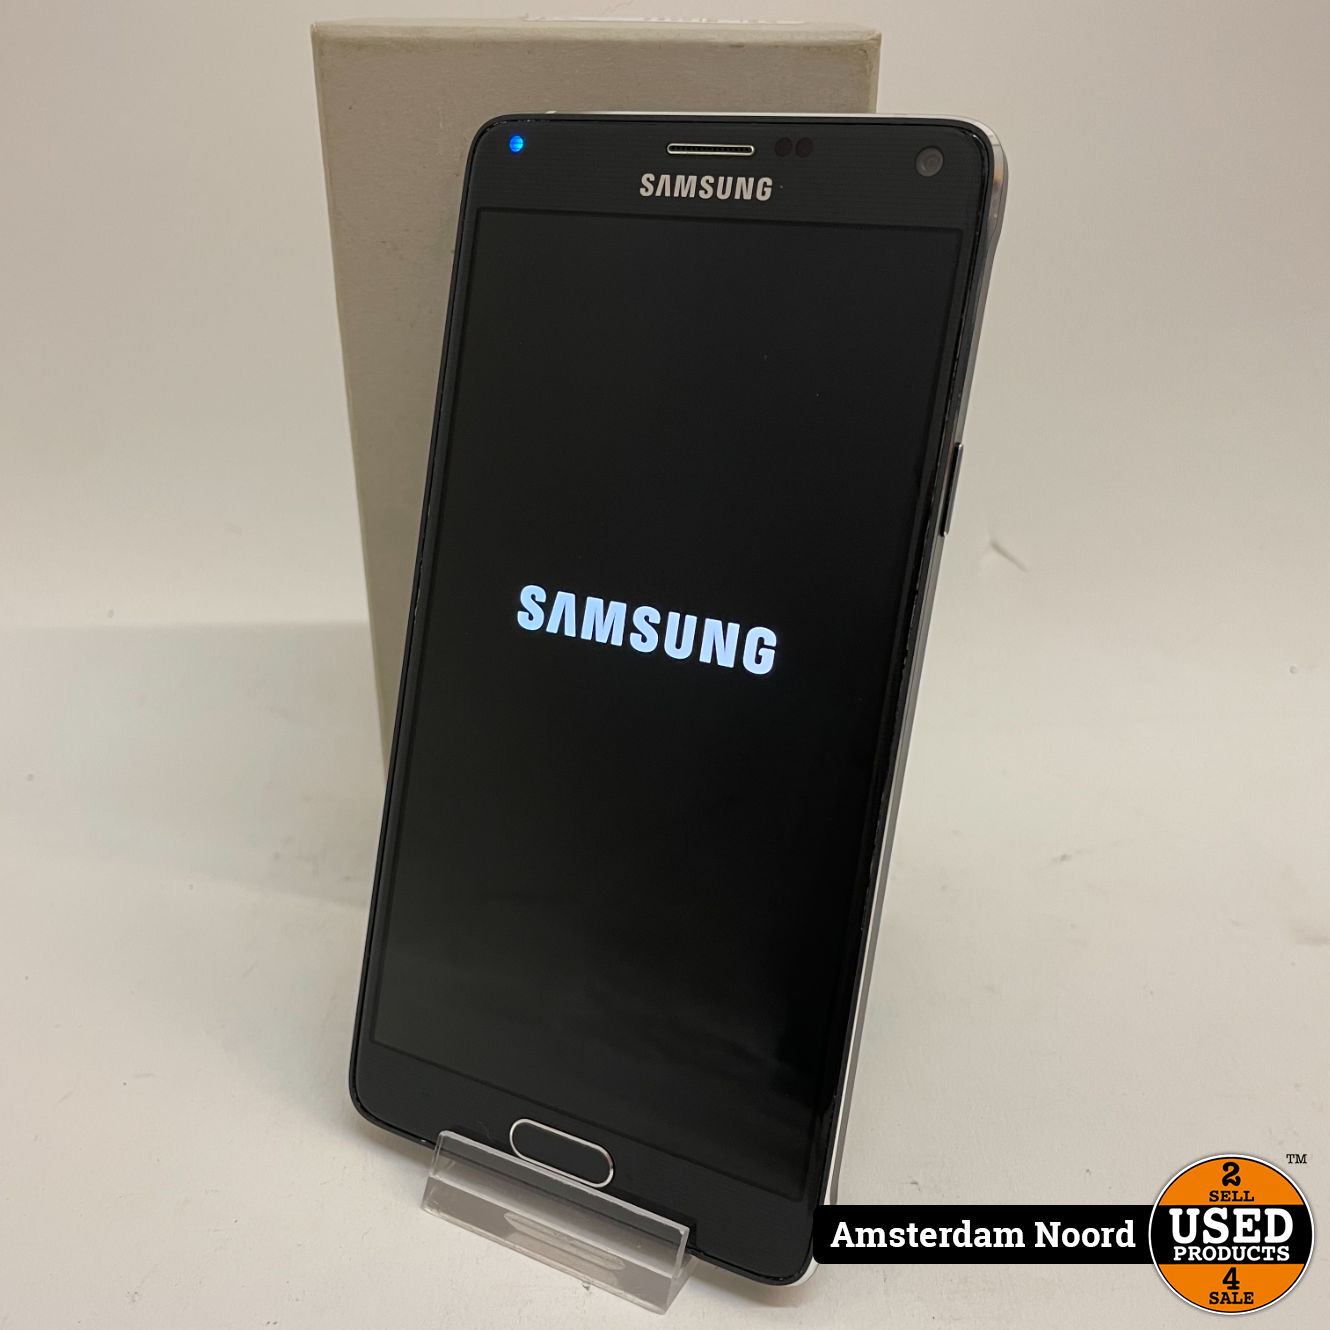 Klap Kanon Slang Samsung Galaxy Note 4 32GB - Used Products Amsterdam Noord